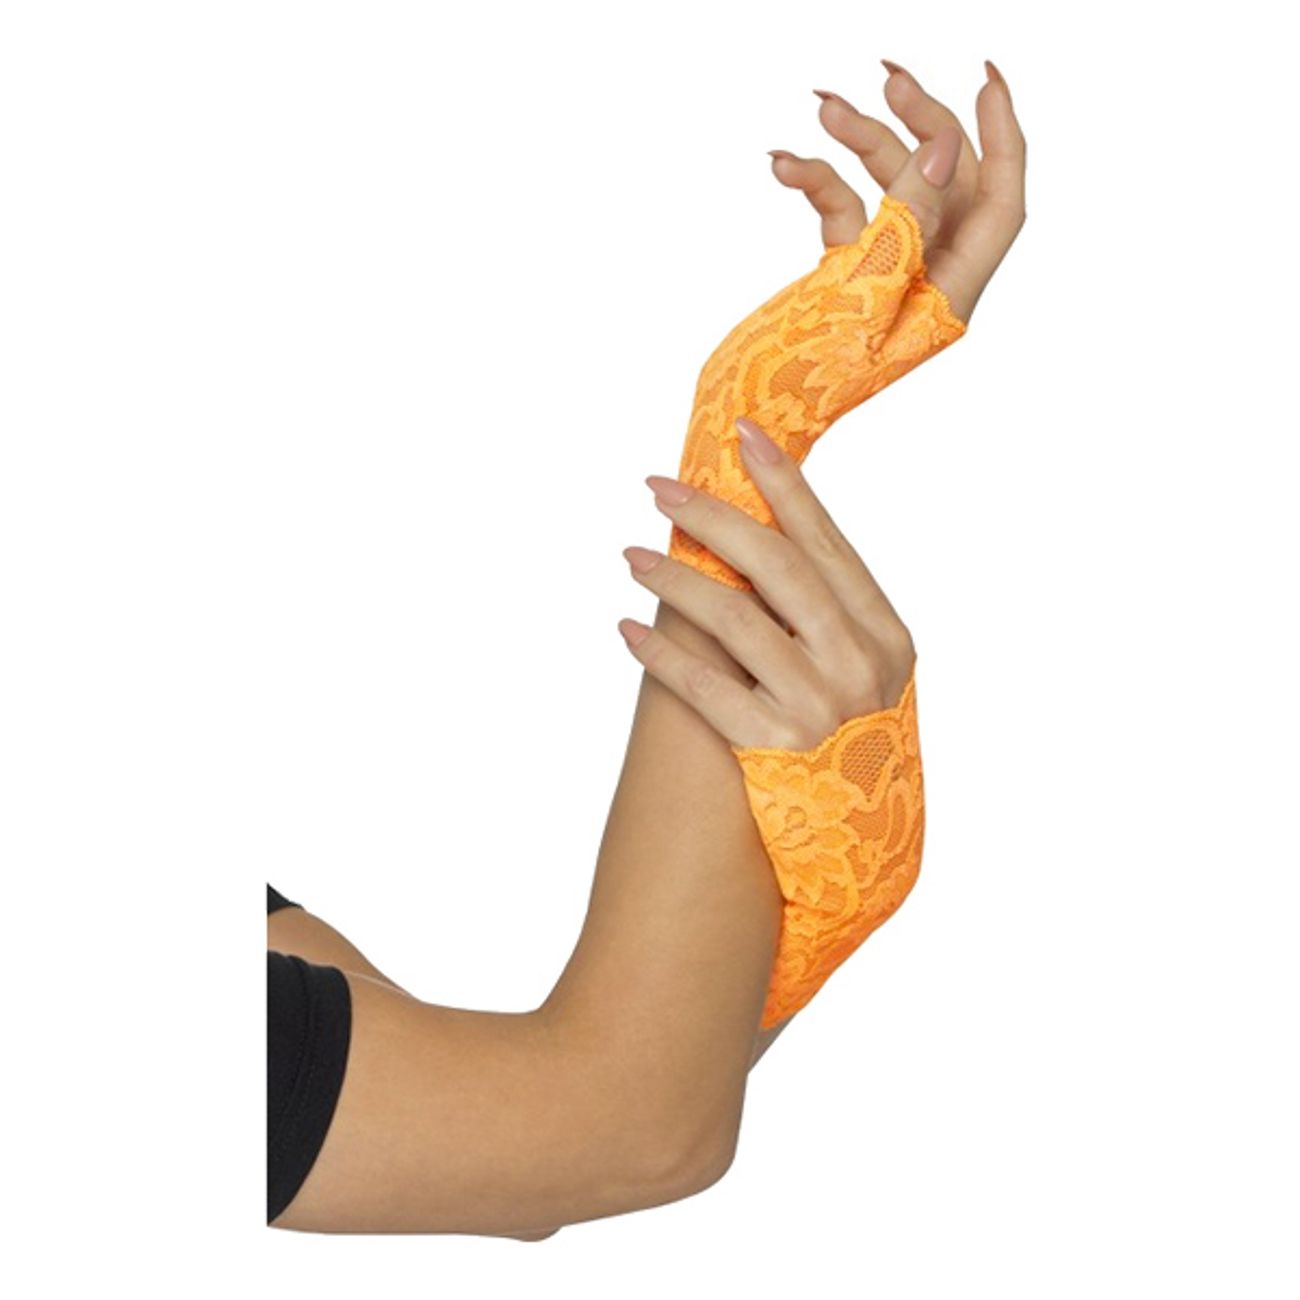 80-tals-fingerlosa-spetshandskar-orange-1